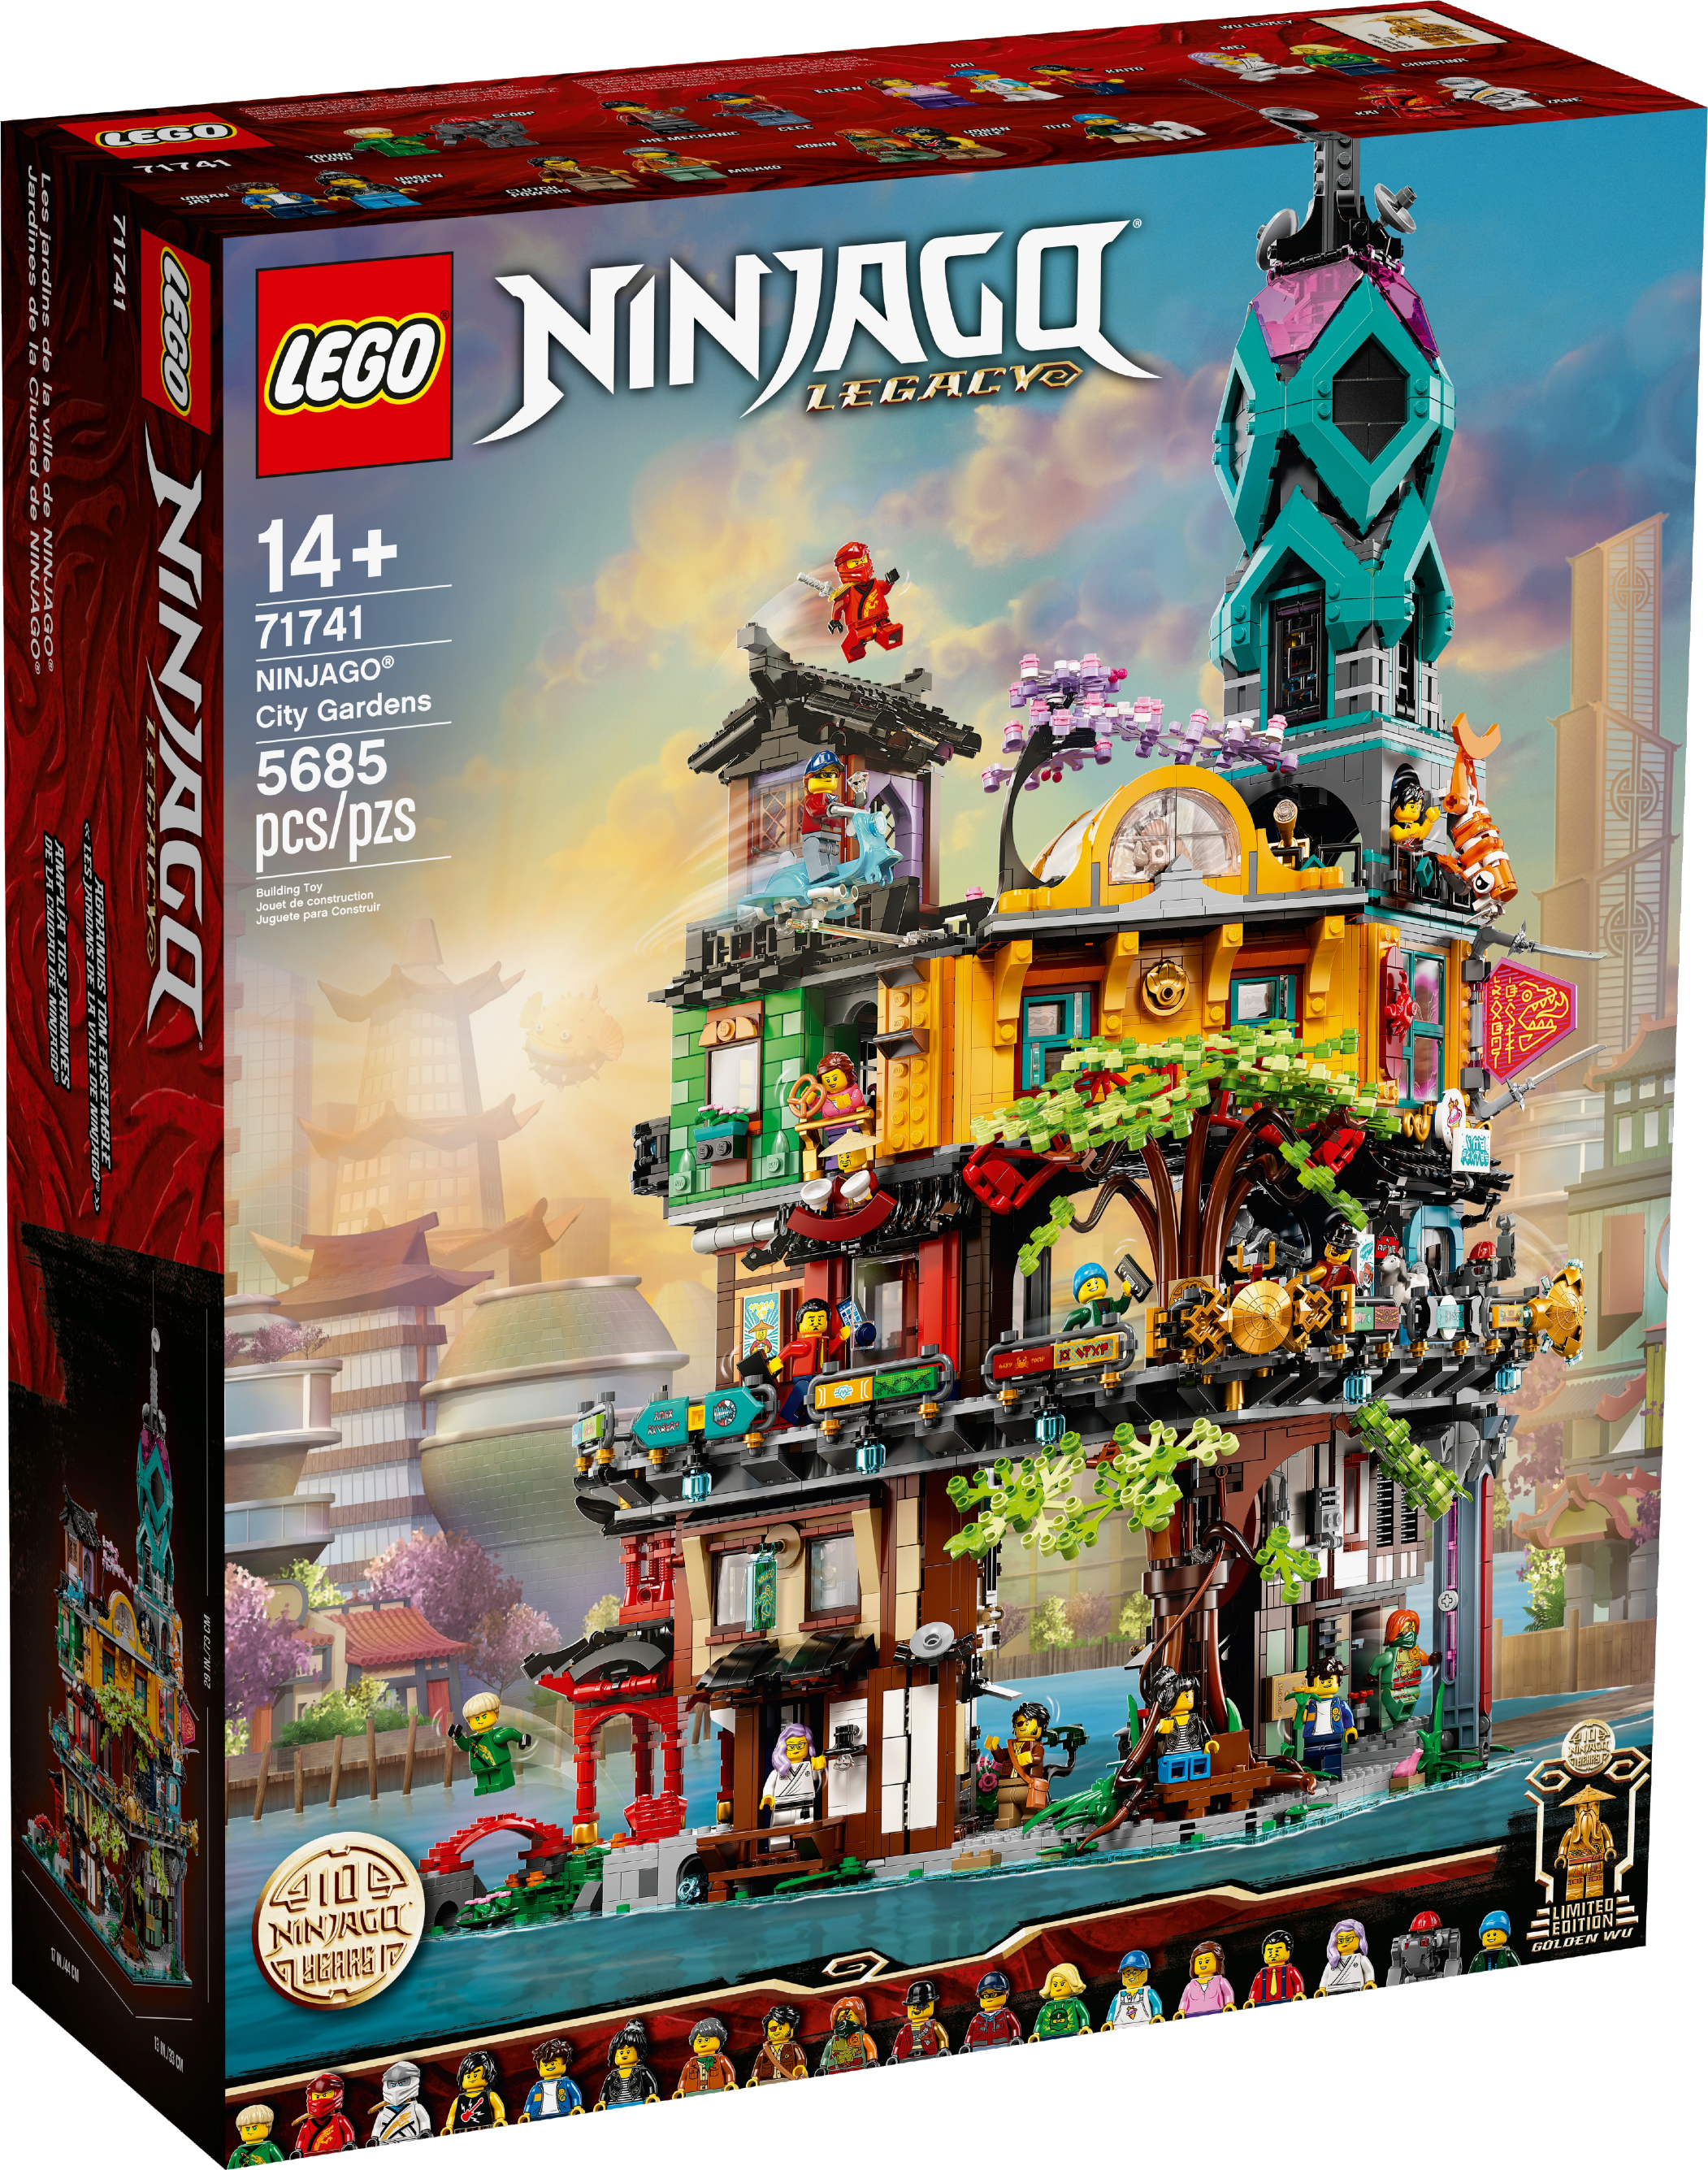 lego ninjago rebooted battle for ninjago city minifigures